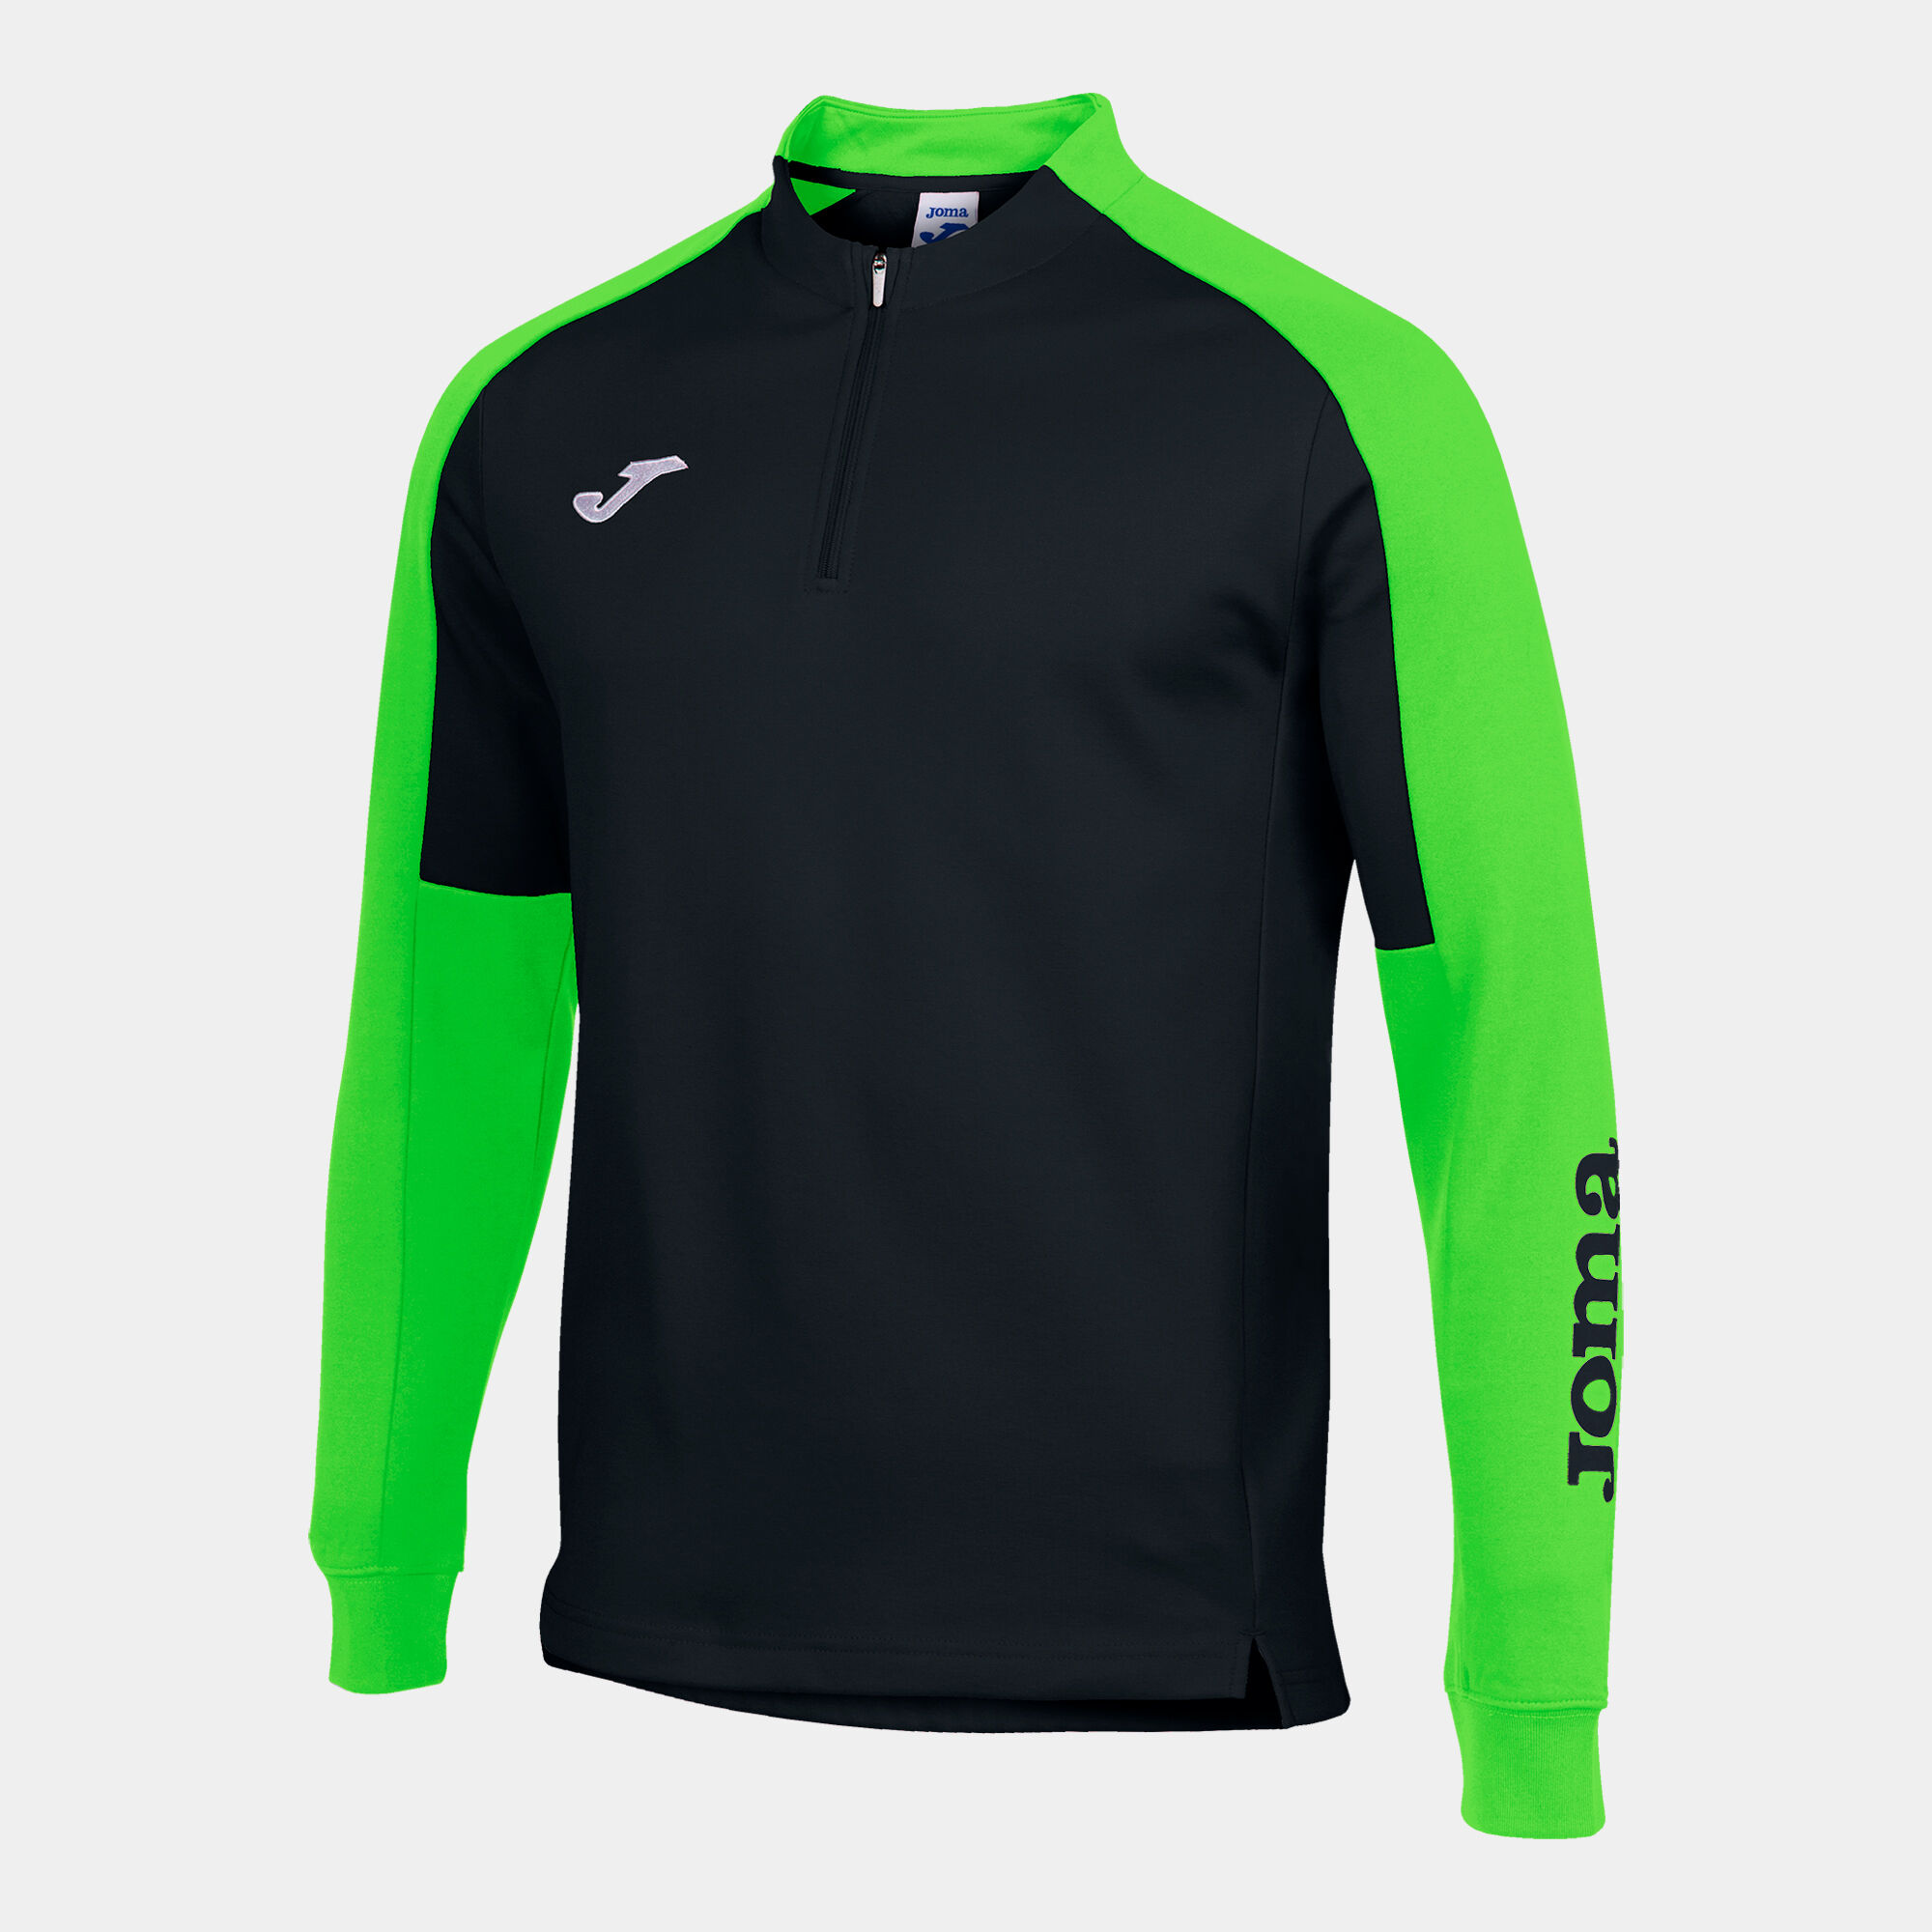 Sweat-shirt homme Eco Championship noir vert fluo